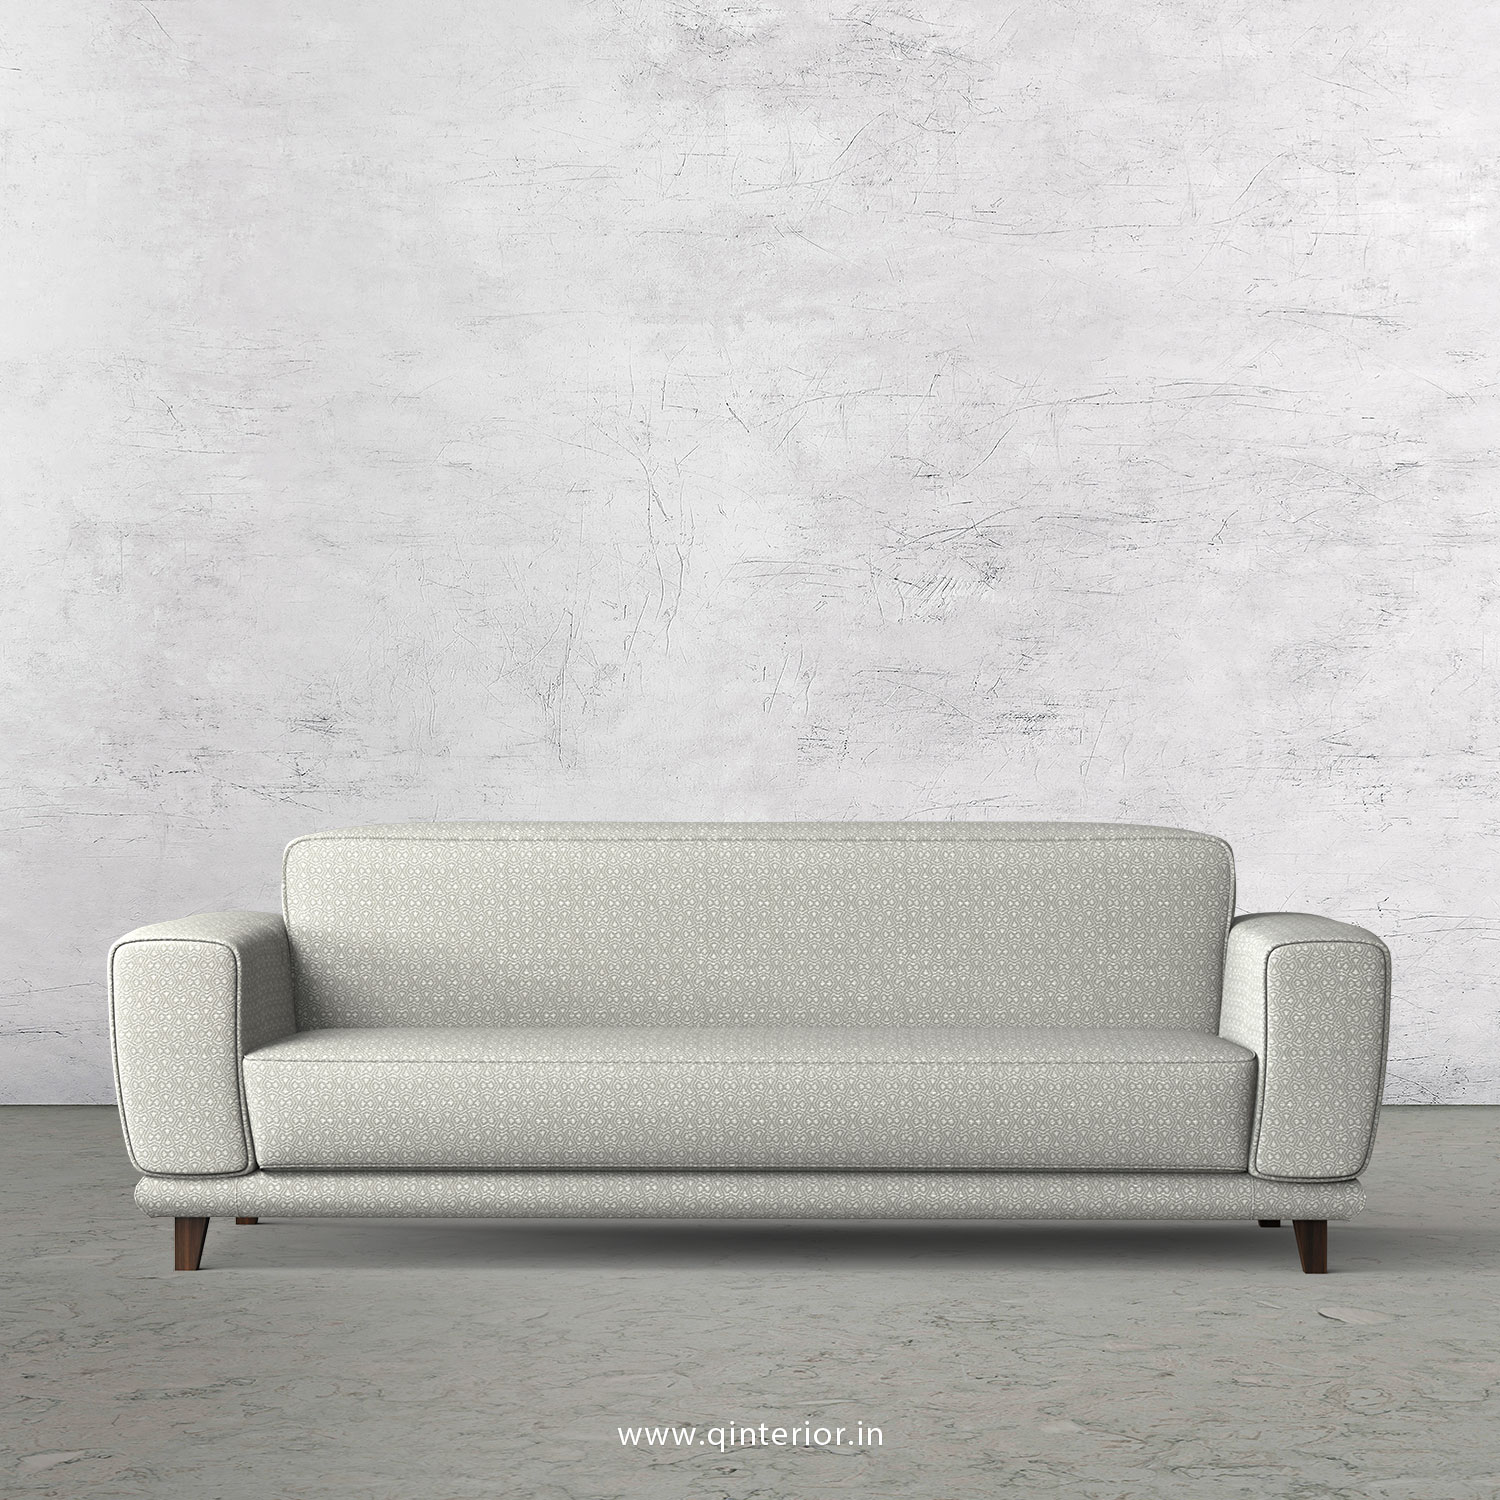 Avana 3 Seater Sofa in Jaquard Fabric - SFA008 JQ39